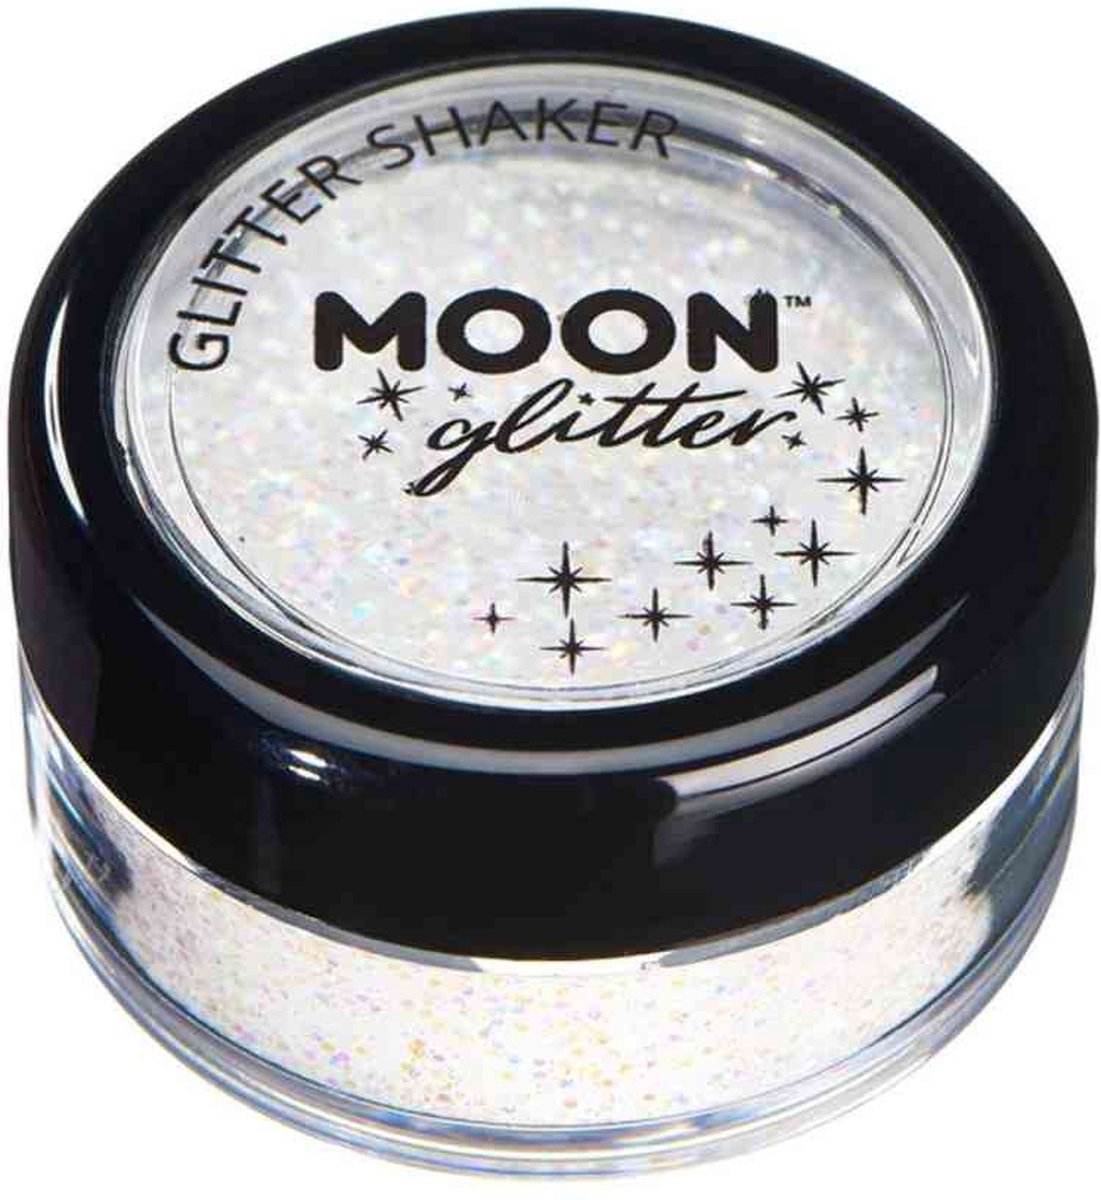 Moon Creations Glitter Makeup Moon Glitter - Pastel Glitter Shaker Wit